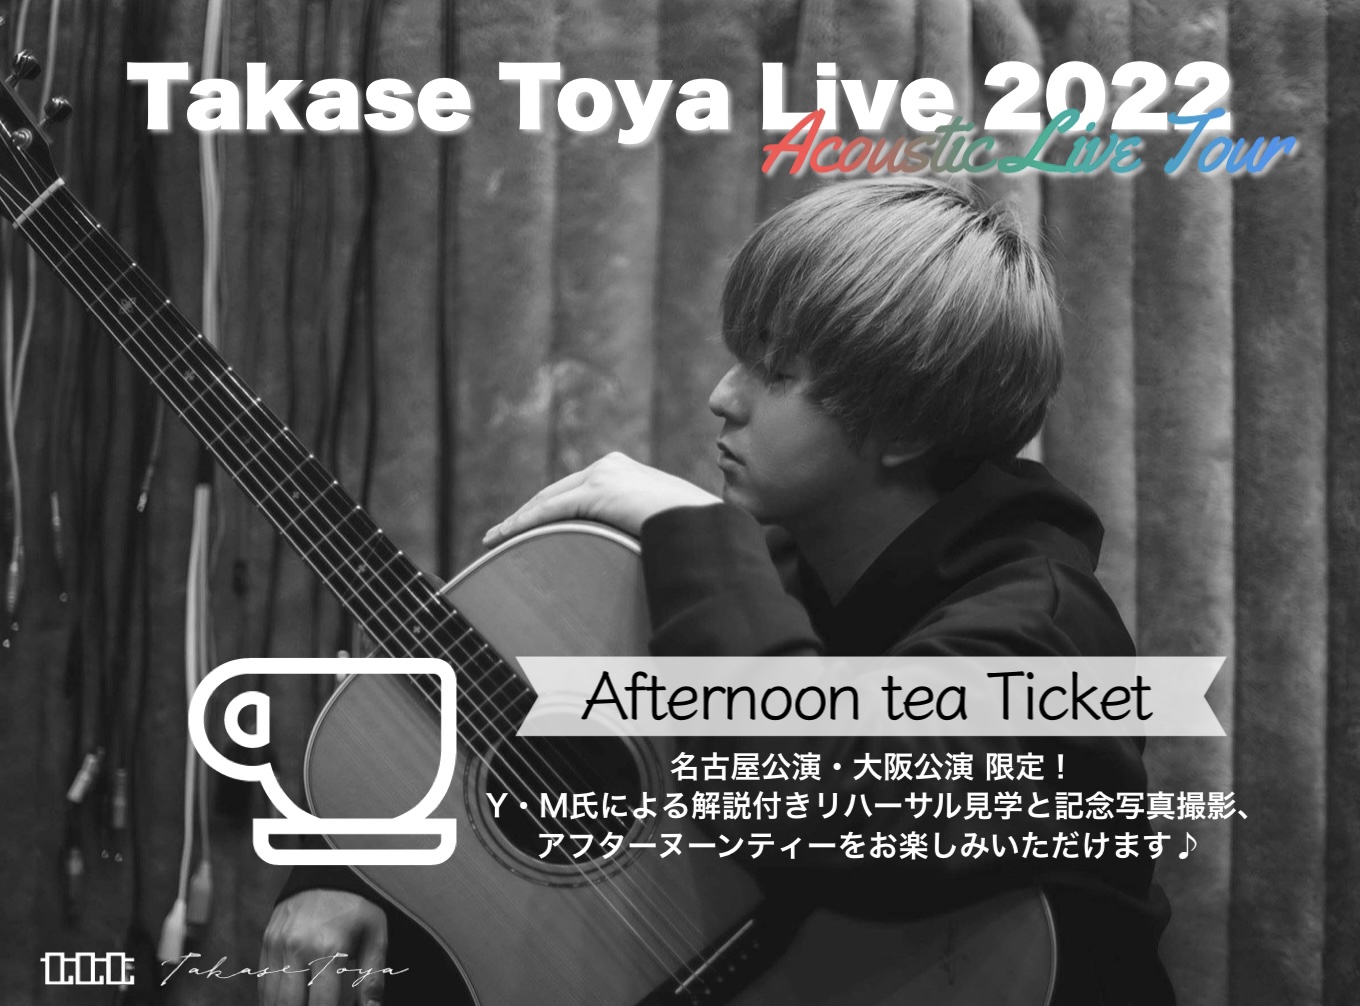 Takase Toya Live 2022【OSAKA】Afternoon tea Ticket